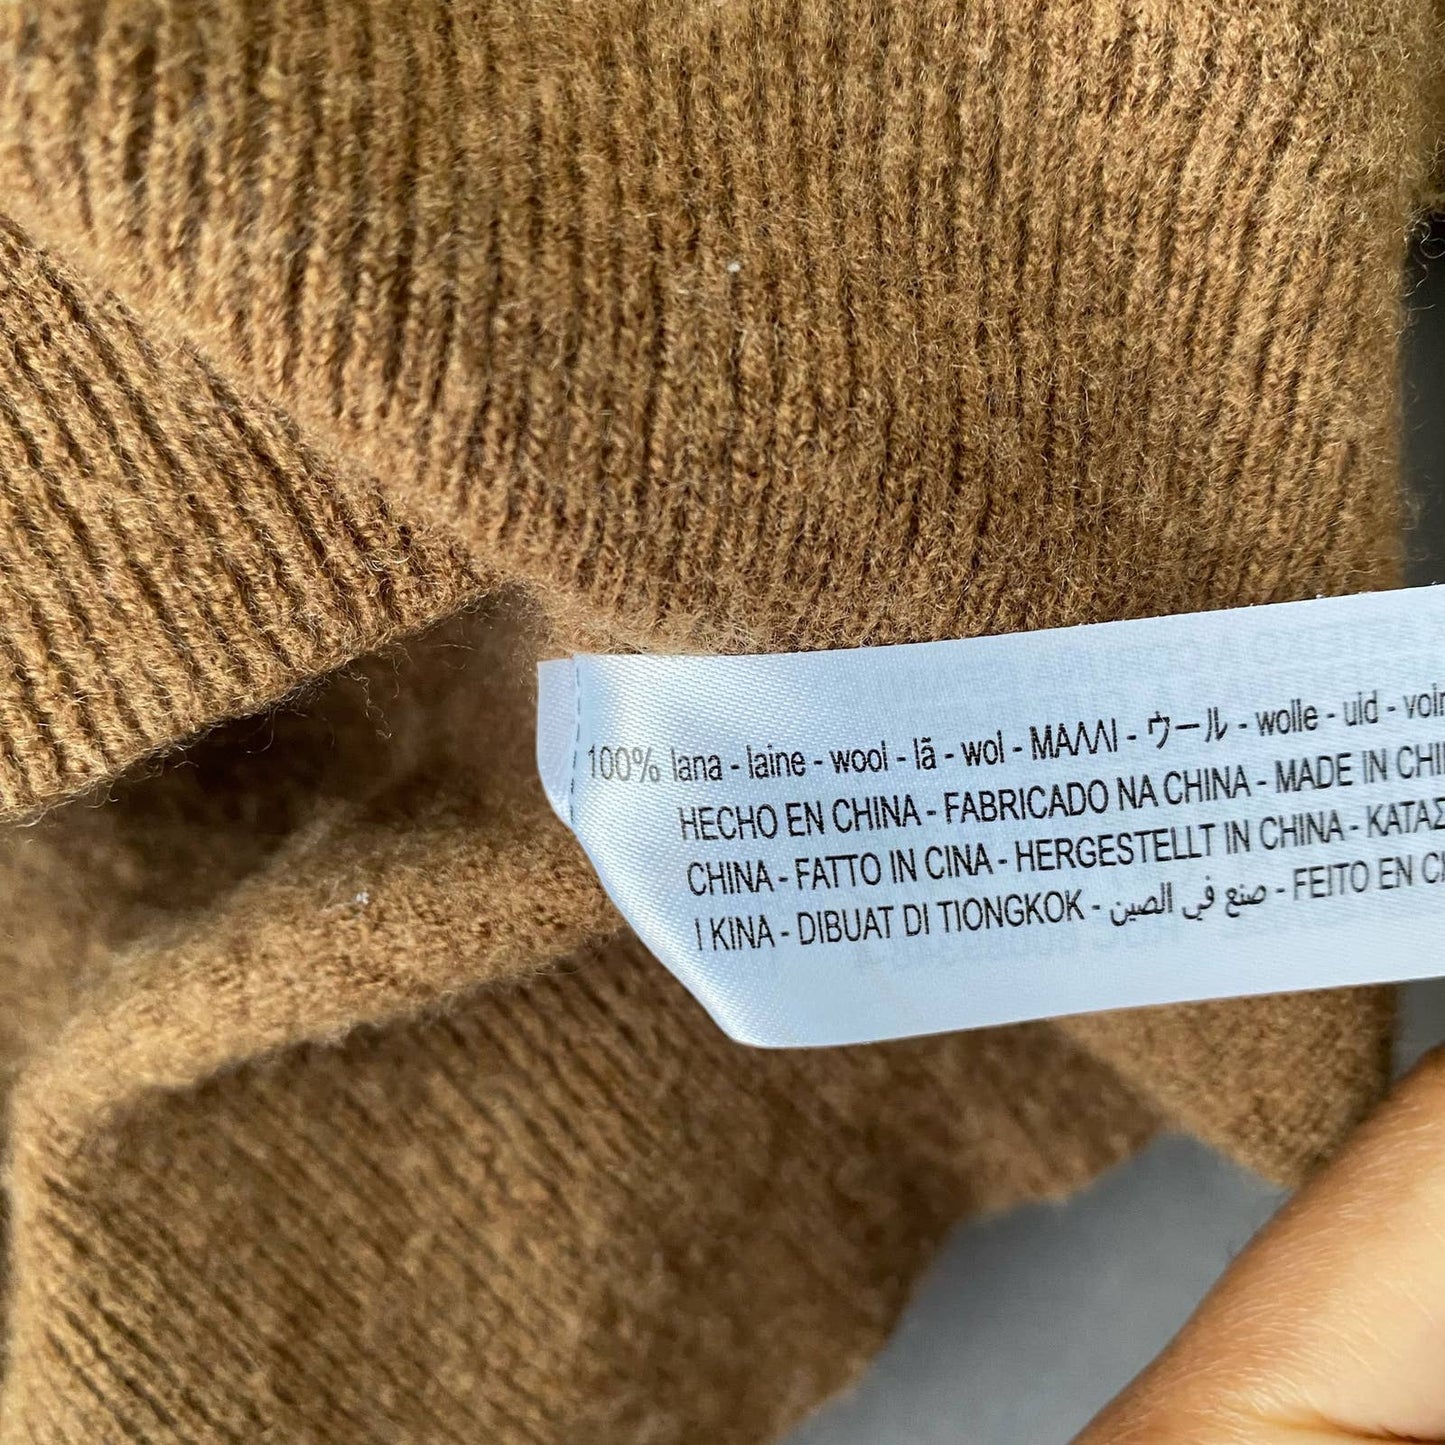 Zara sz L 100% wool v-neck cropped sweater